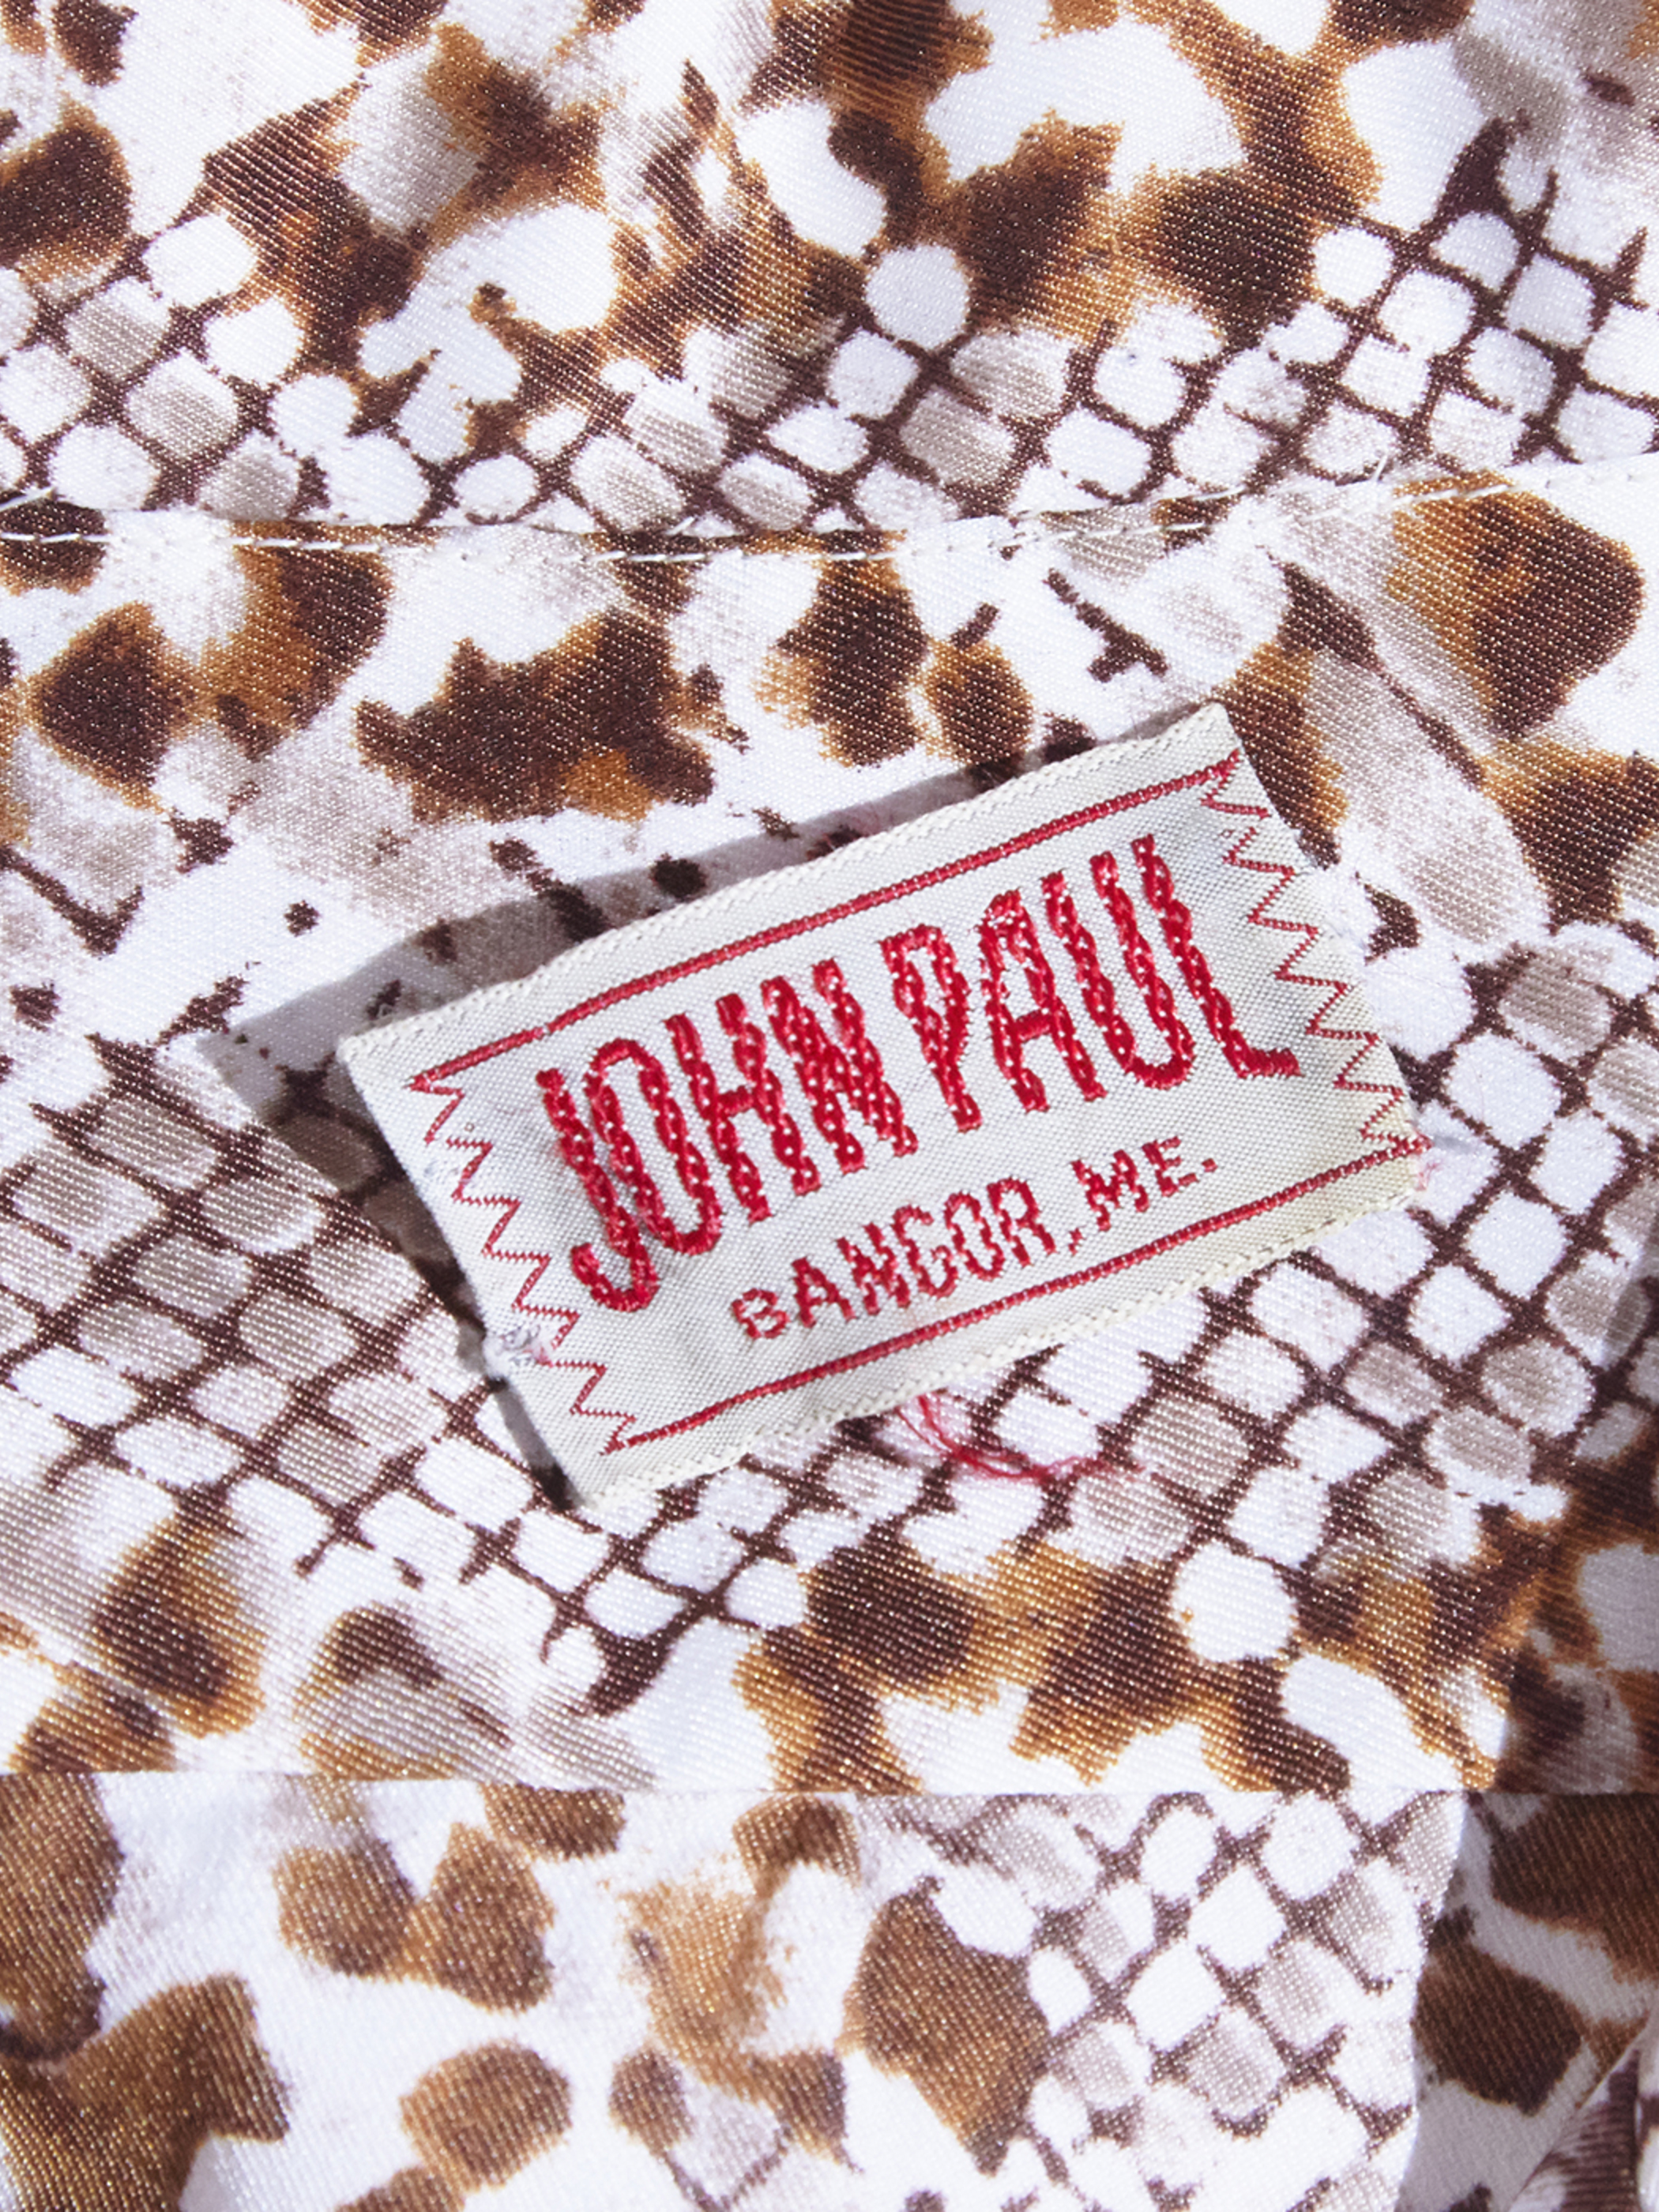 1970s "JOHN PAUL" all over pattern polyester shirt -PYTHON-